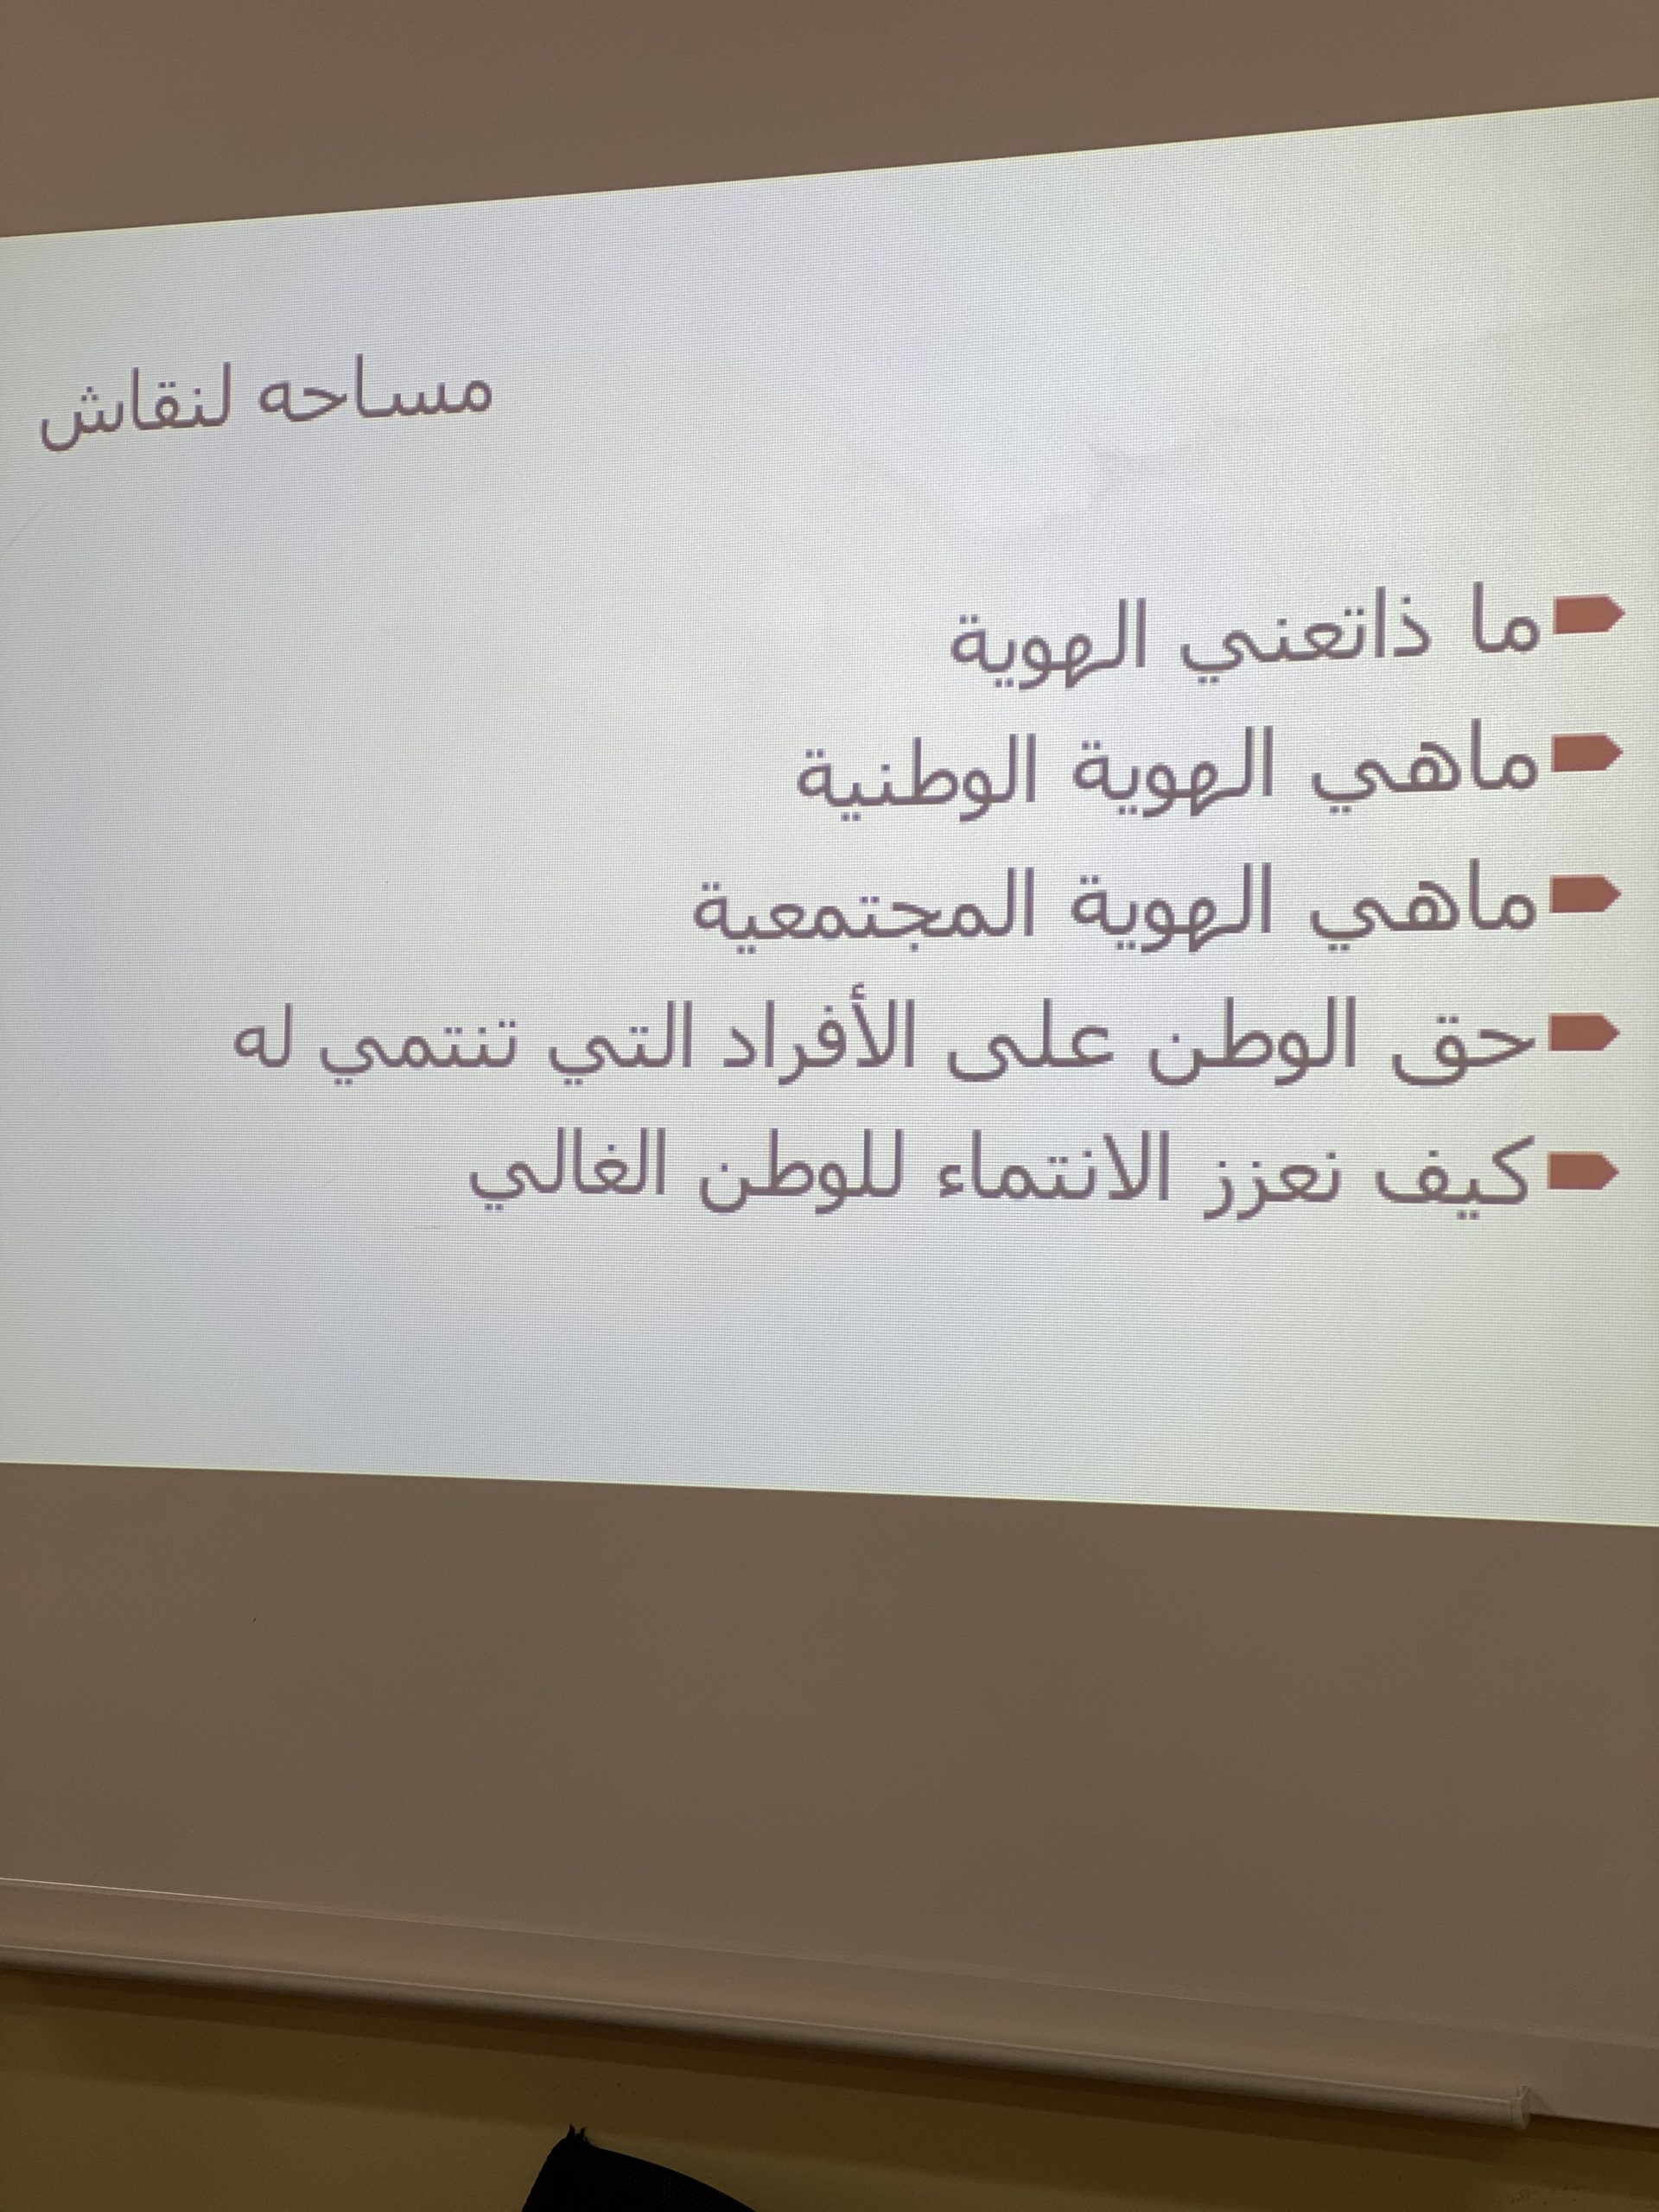 You are currently viewing المواطنة الرقمية والمسؤولية الاجتماعية ضمن أنشطة جمعية رؤوف لليتيمات